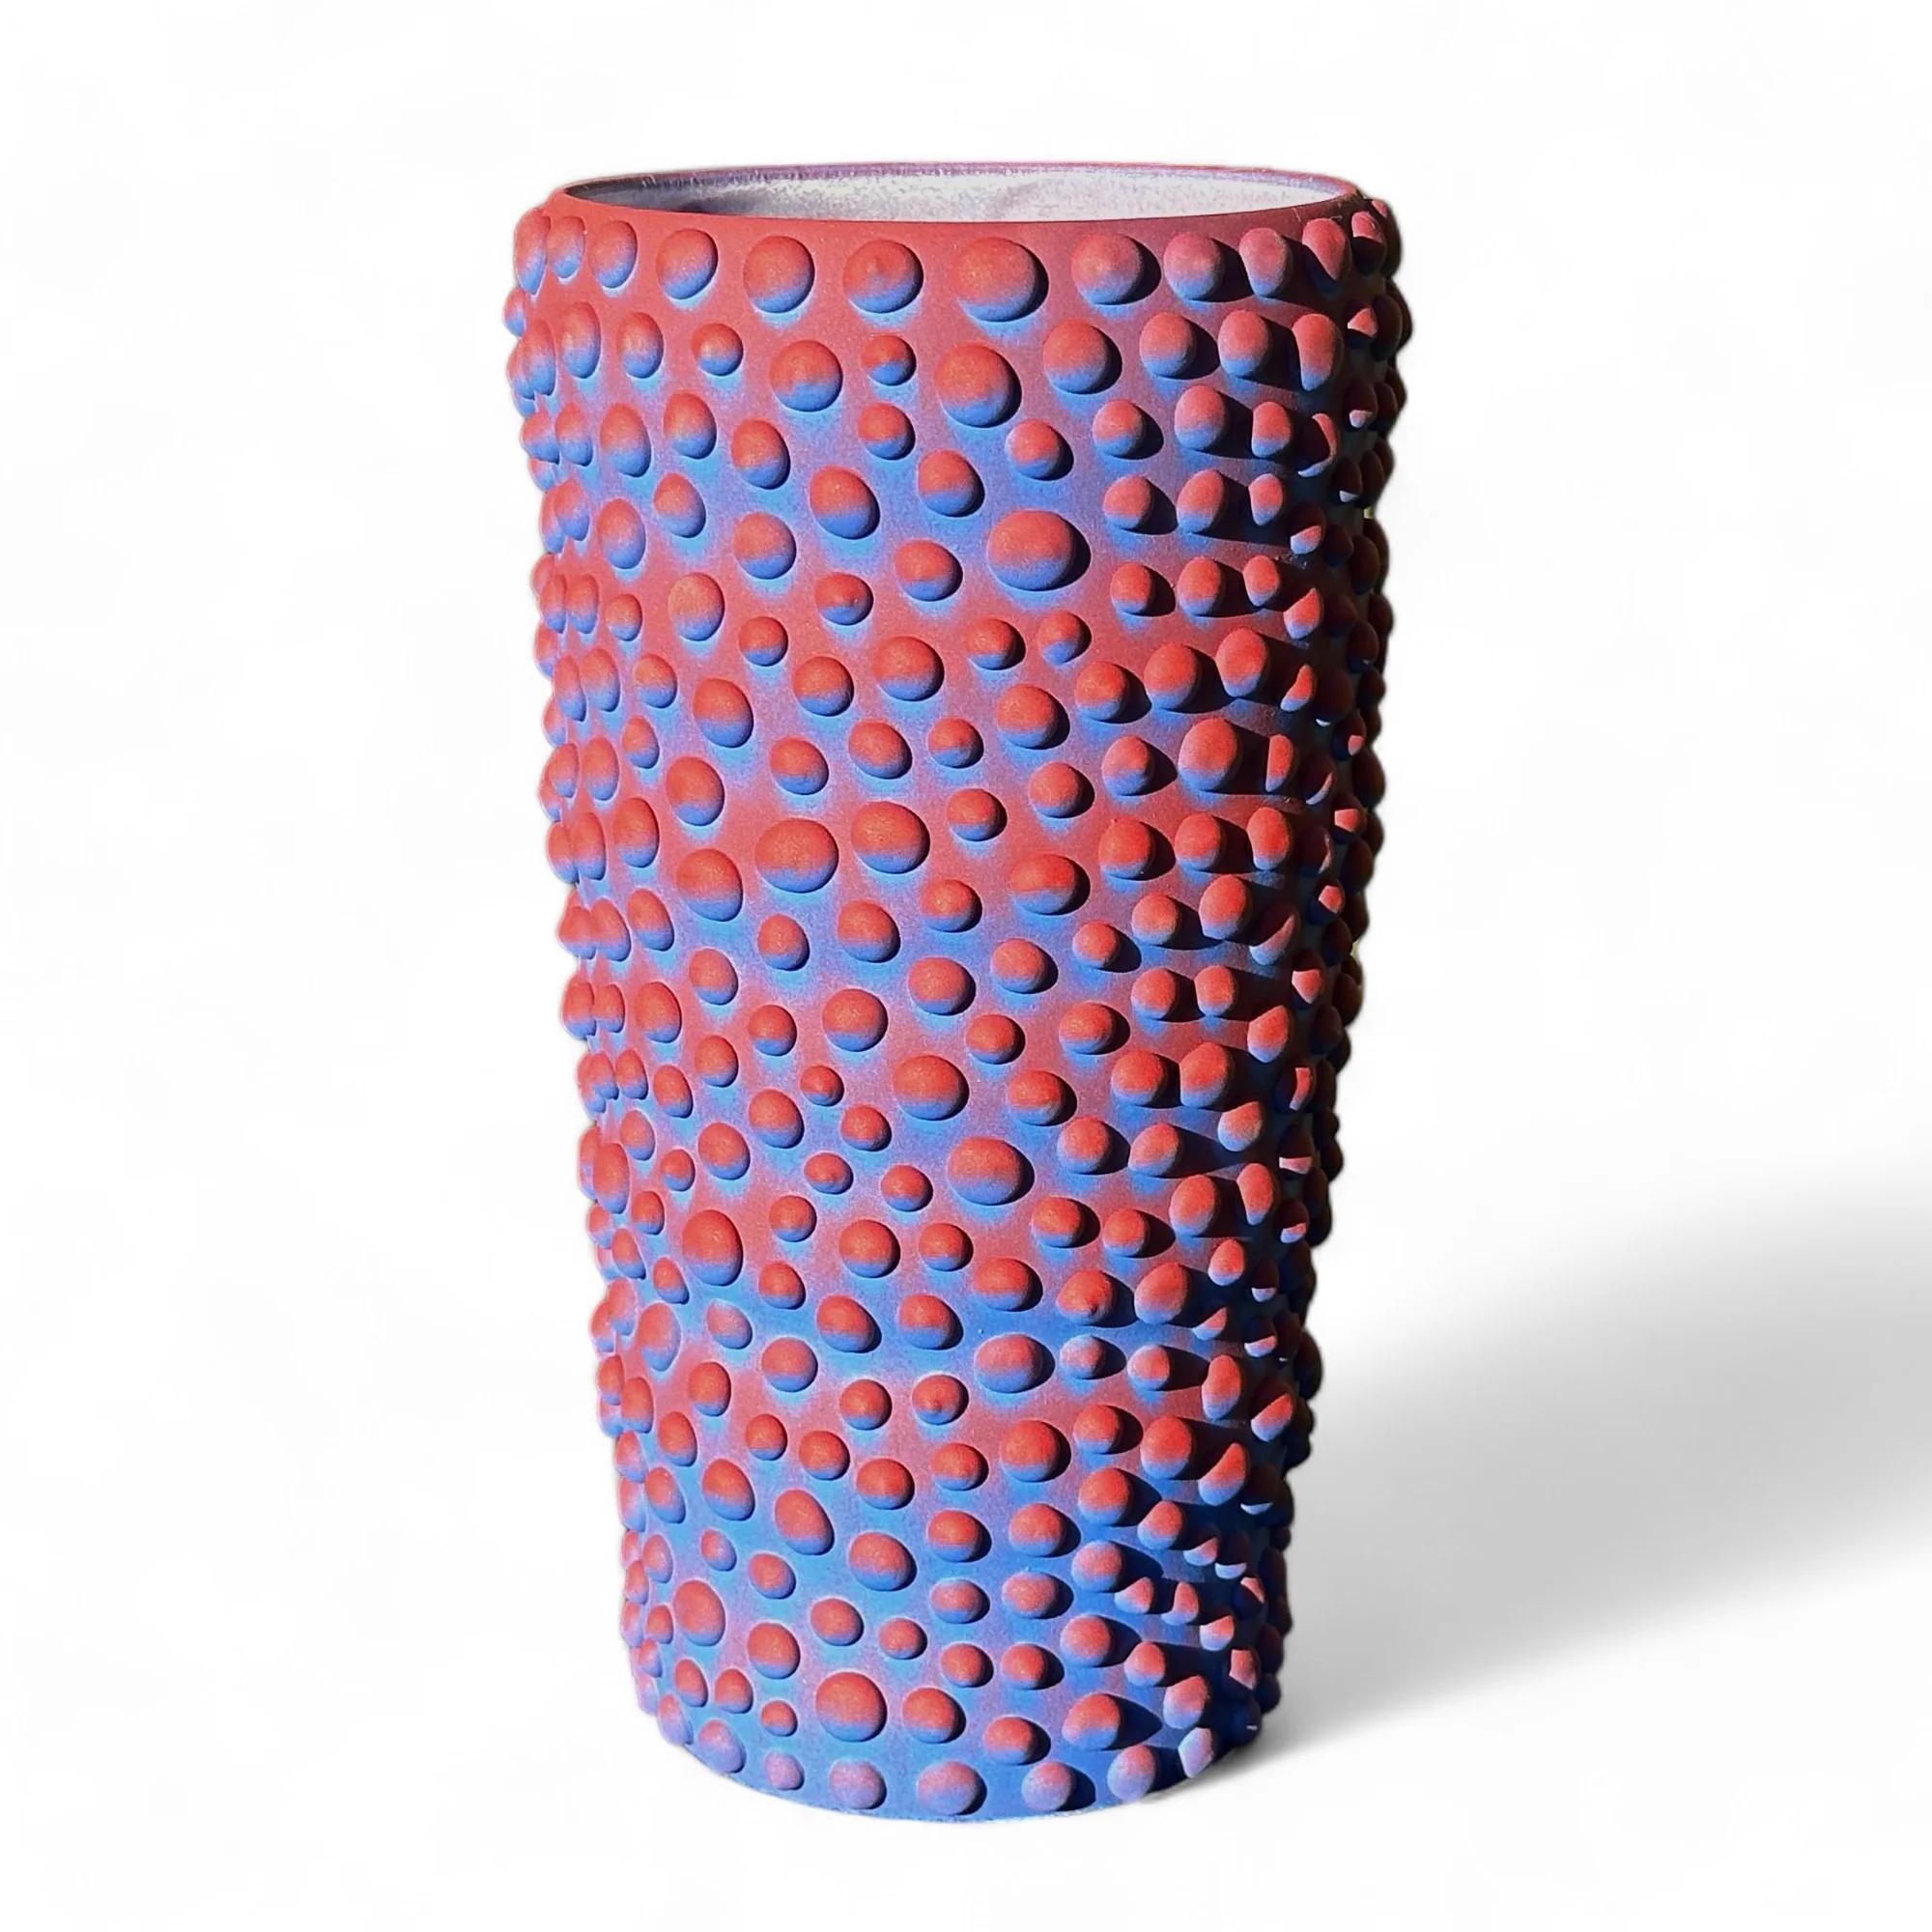 American Blurple And Vermillion Organic Dot Ombre Vase For Sale